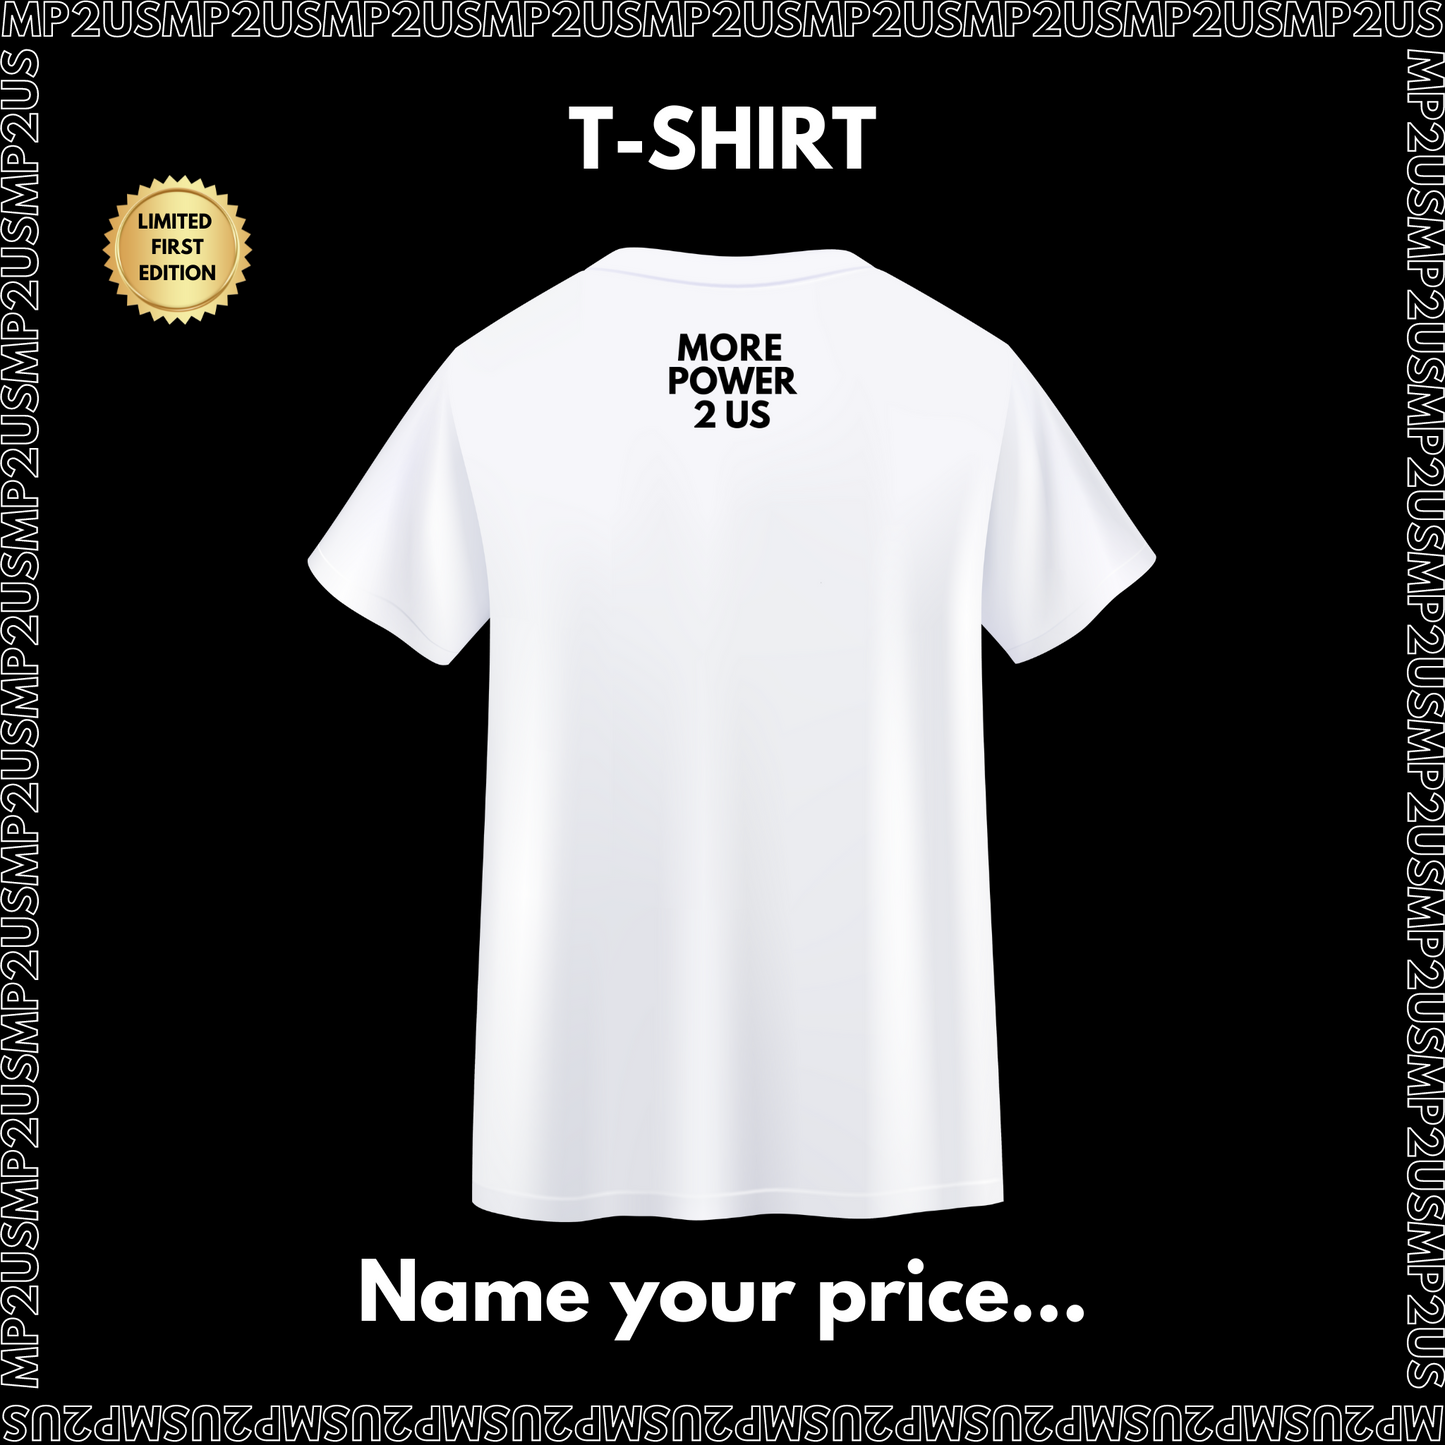 5-"Bold Statement" T-Shirt - Black / White - PRE-ORDER